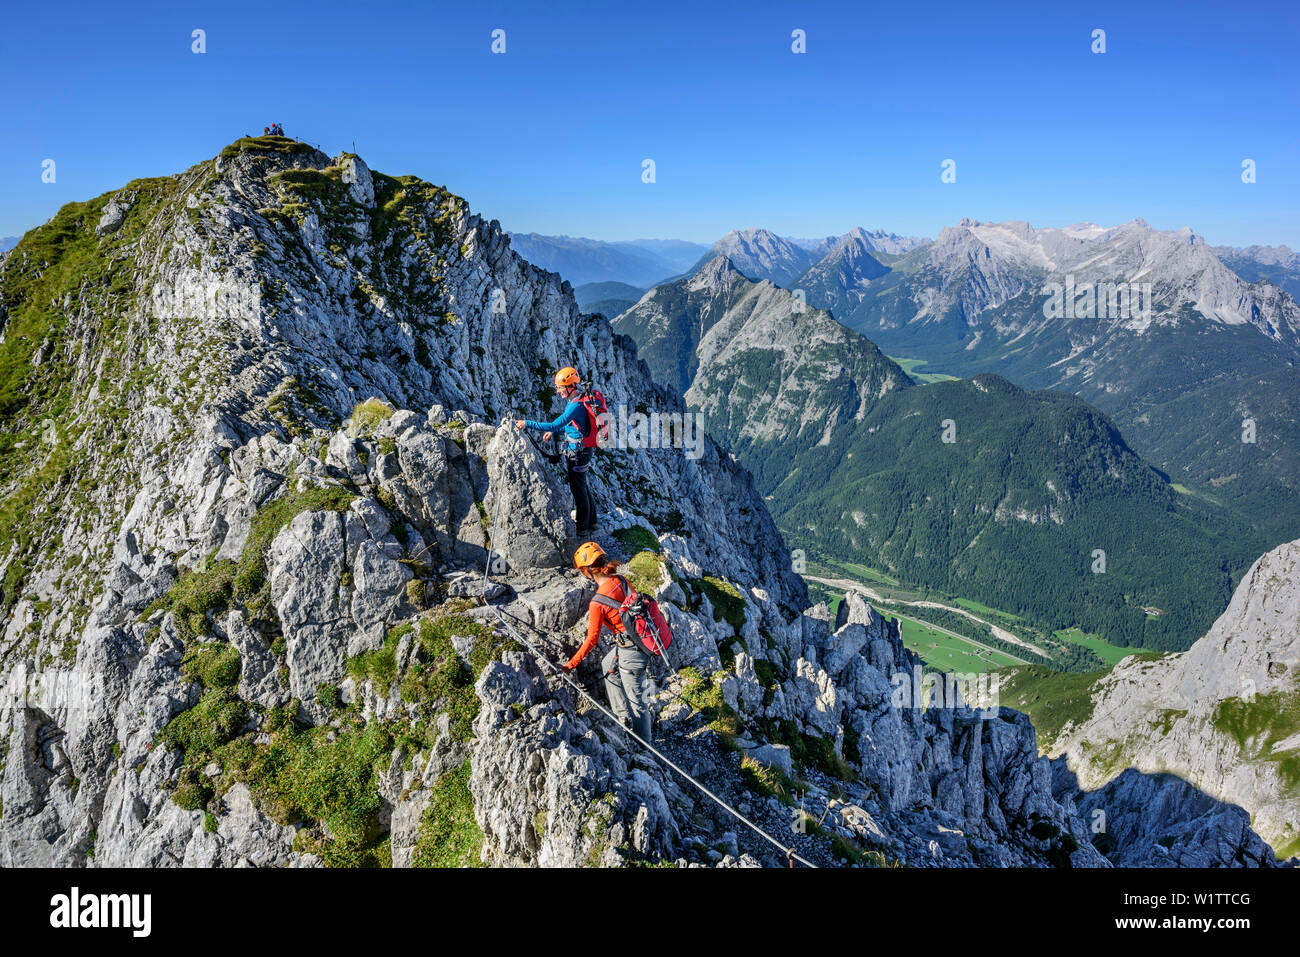 Two women climbing on fixed-rope route Mittenwalder Hoehenweg, Wetterstein range in background, fixed-rope route Mittenwalder Hoehenweg, Karwendel ran Stock Photo